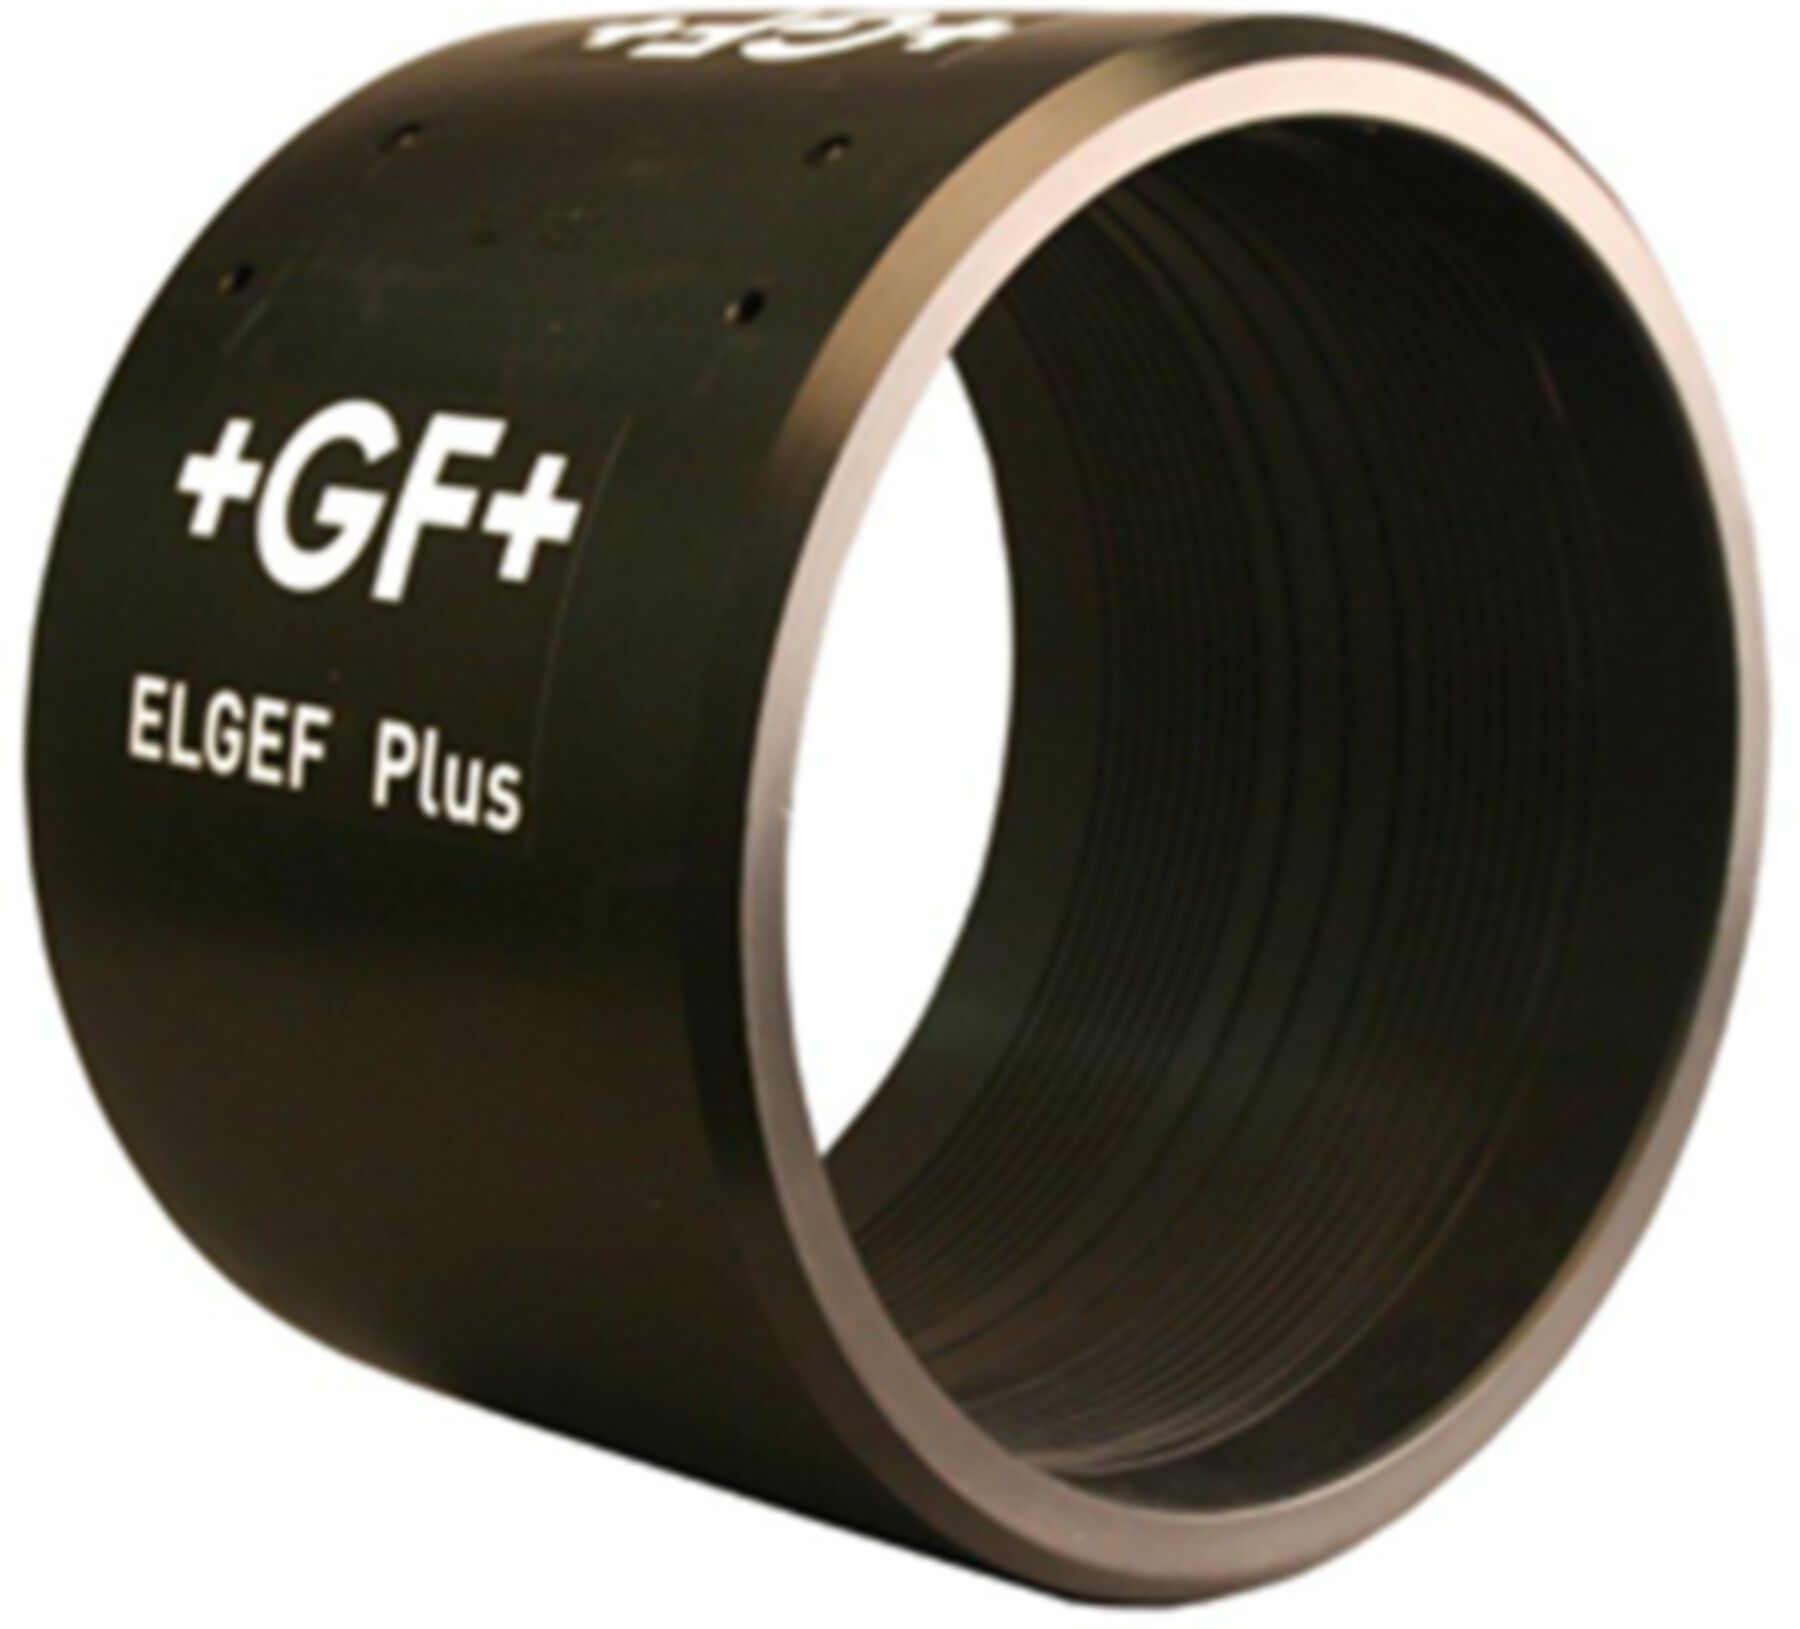 ELGEF Muffe PN 16 d 630mm 753 911 709 - ELGEF Plus Elektroschweissfittinge